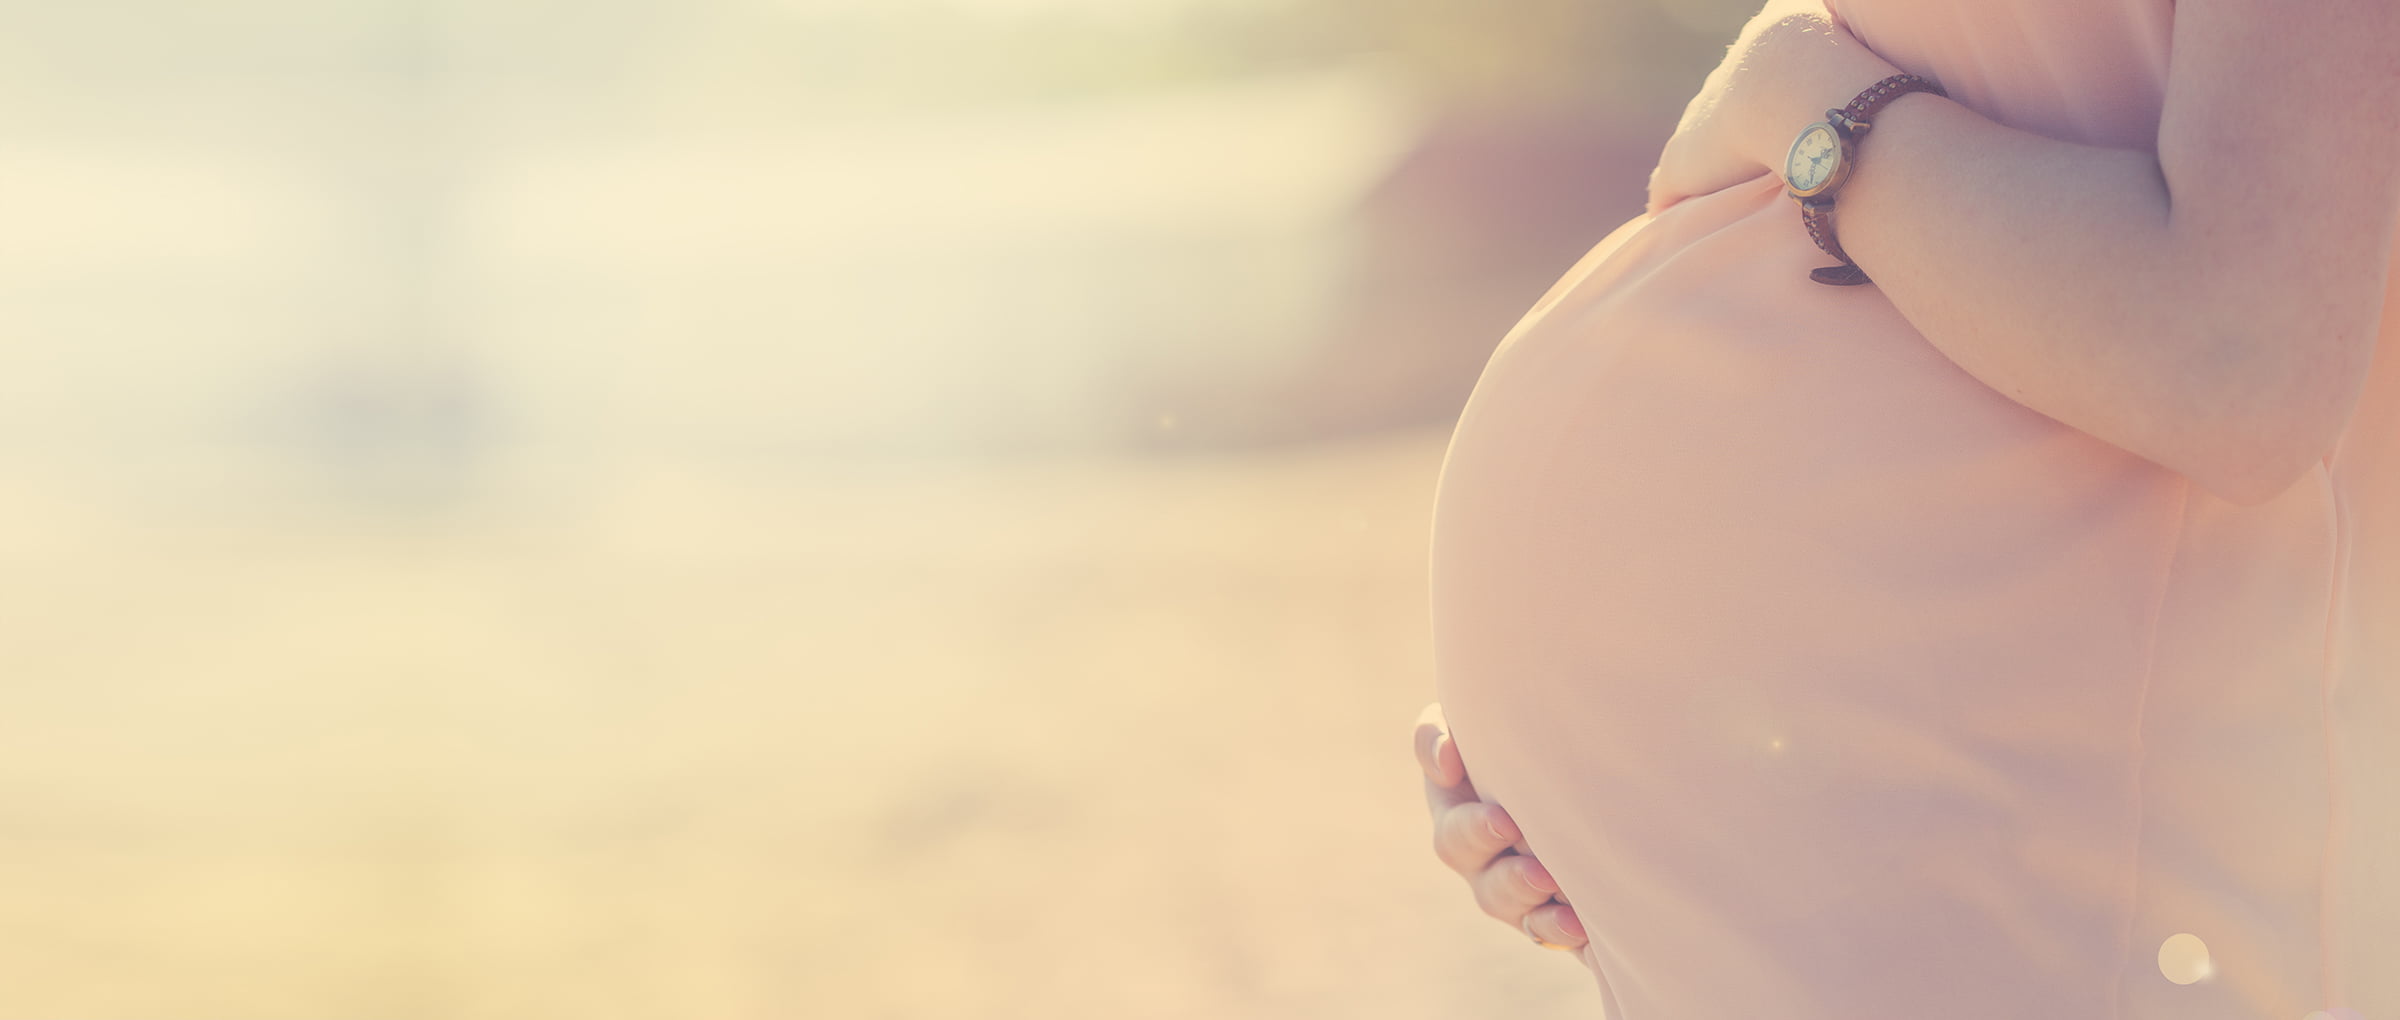 Genetic link between surrogate and baby